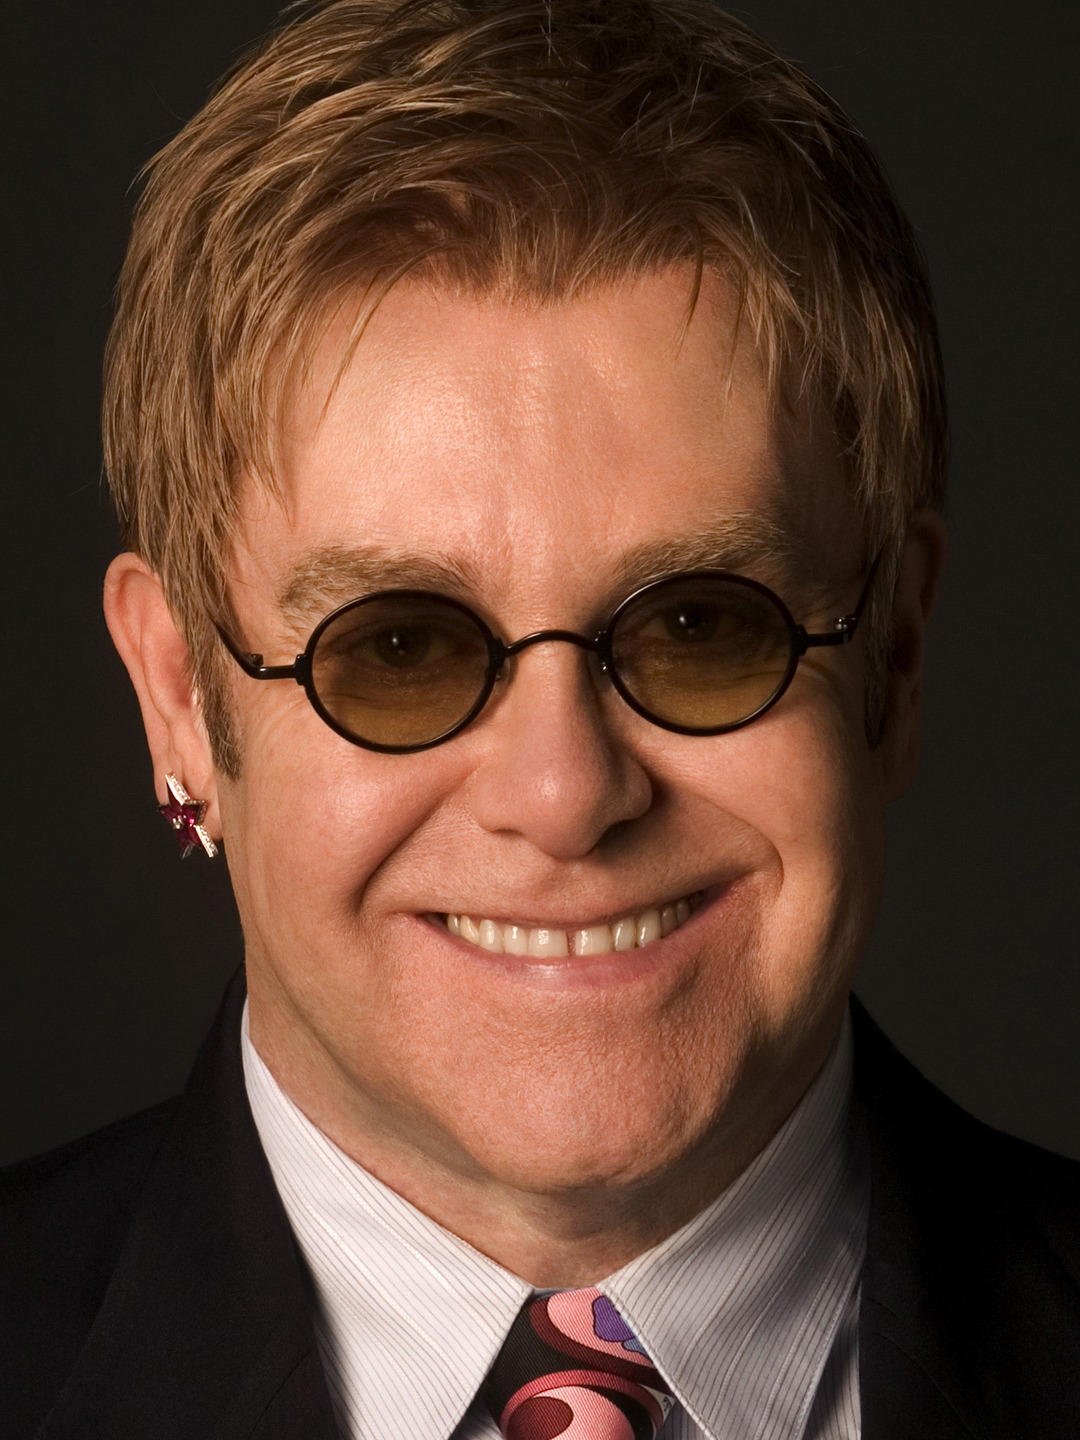 Elton John height and weight